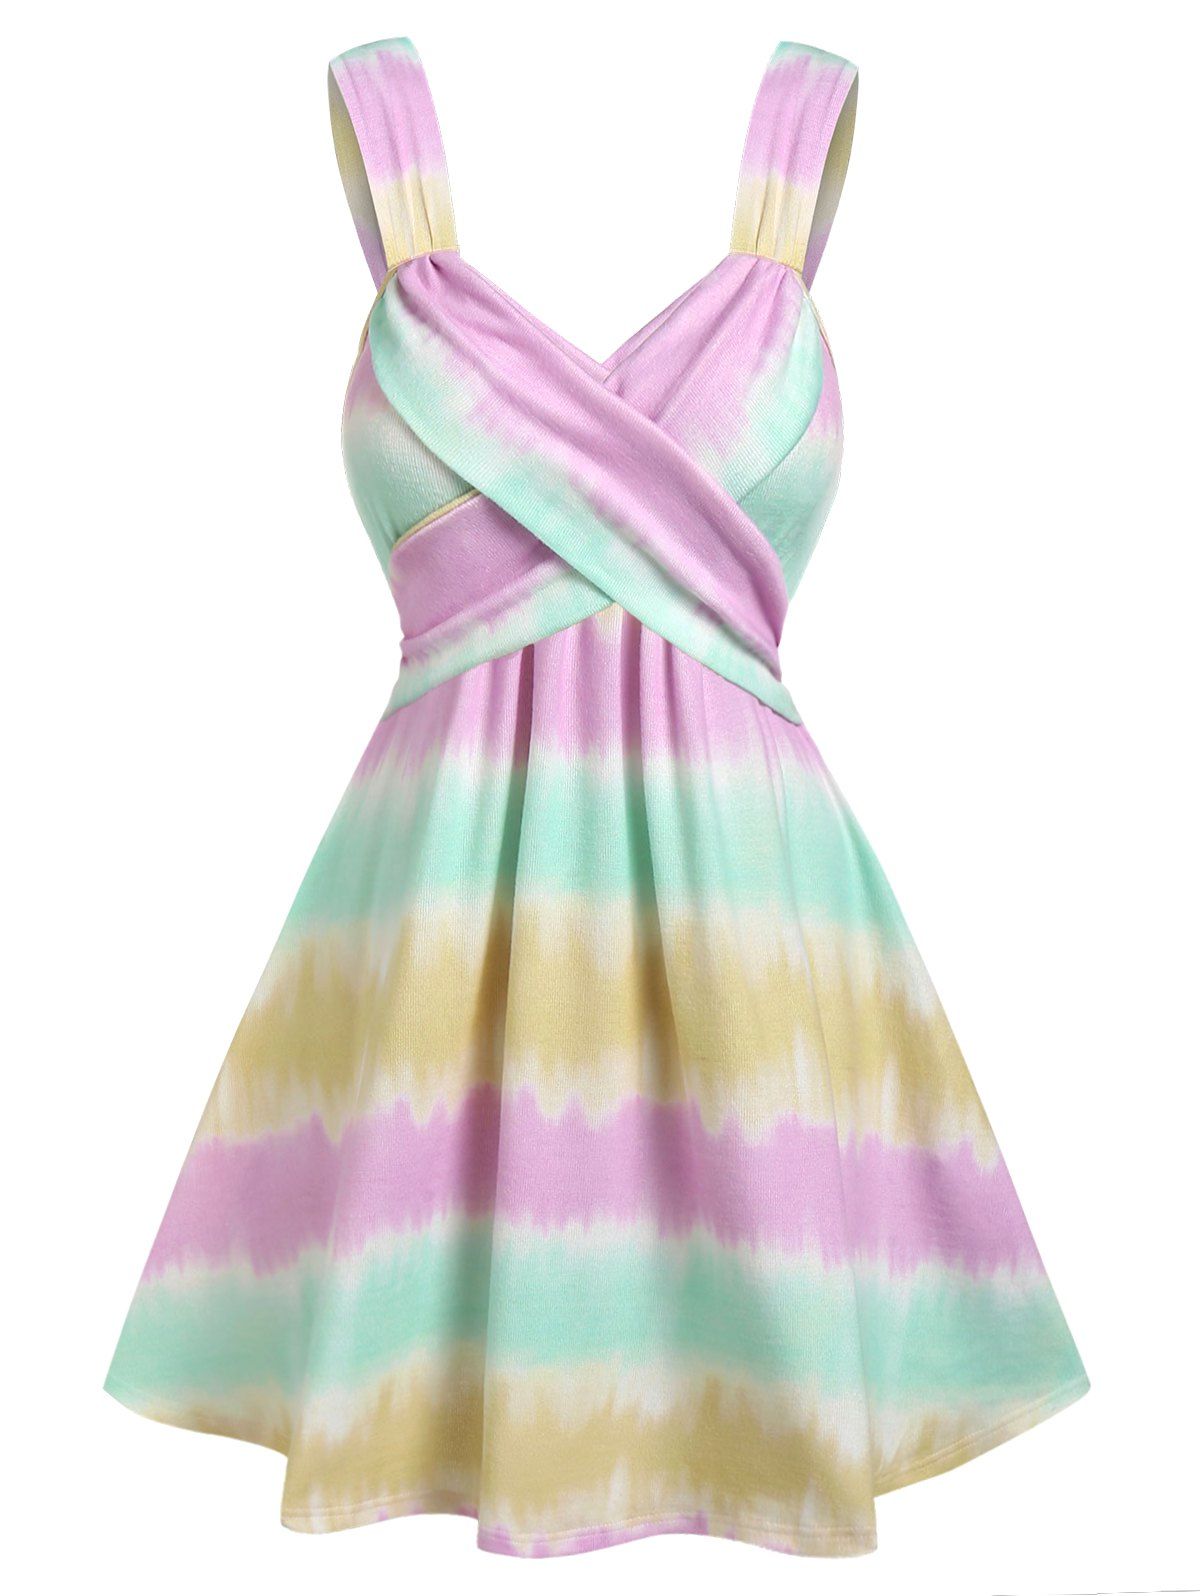 Tie Dye Print Mini Dress Crossover Pastel Striped A Line Dress Sleeveless Summer Dress - multicolor L